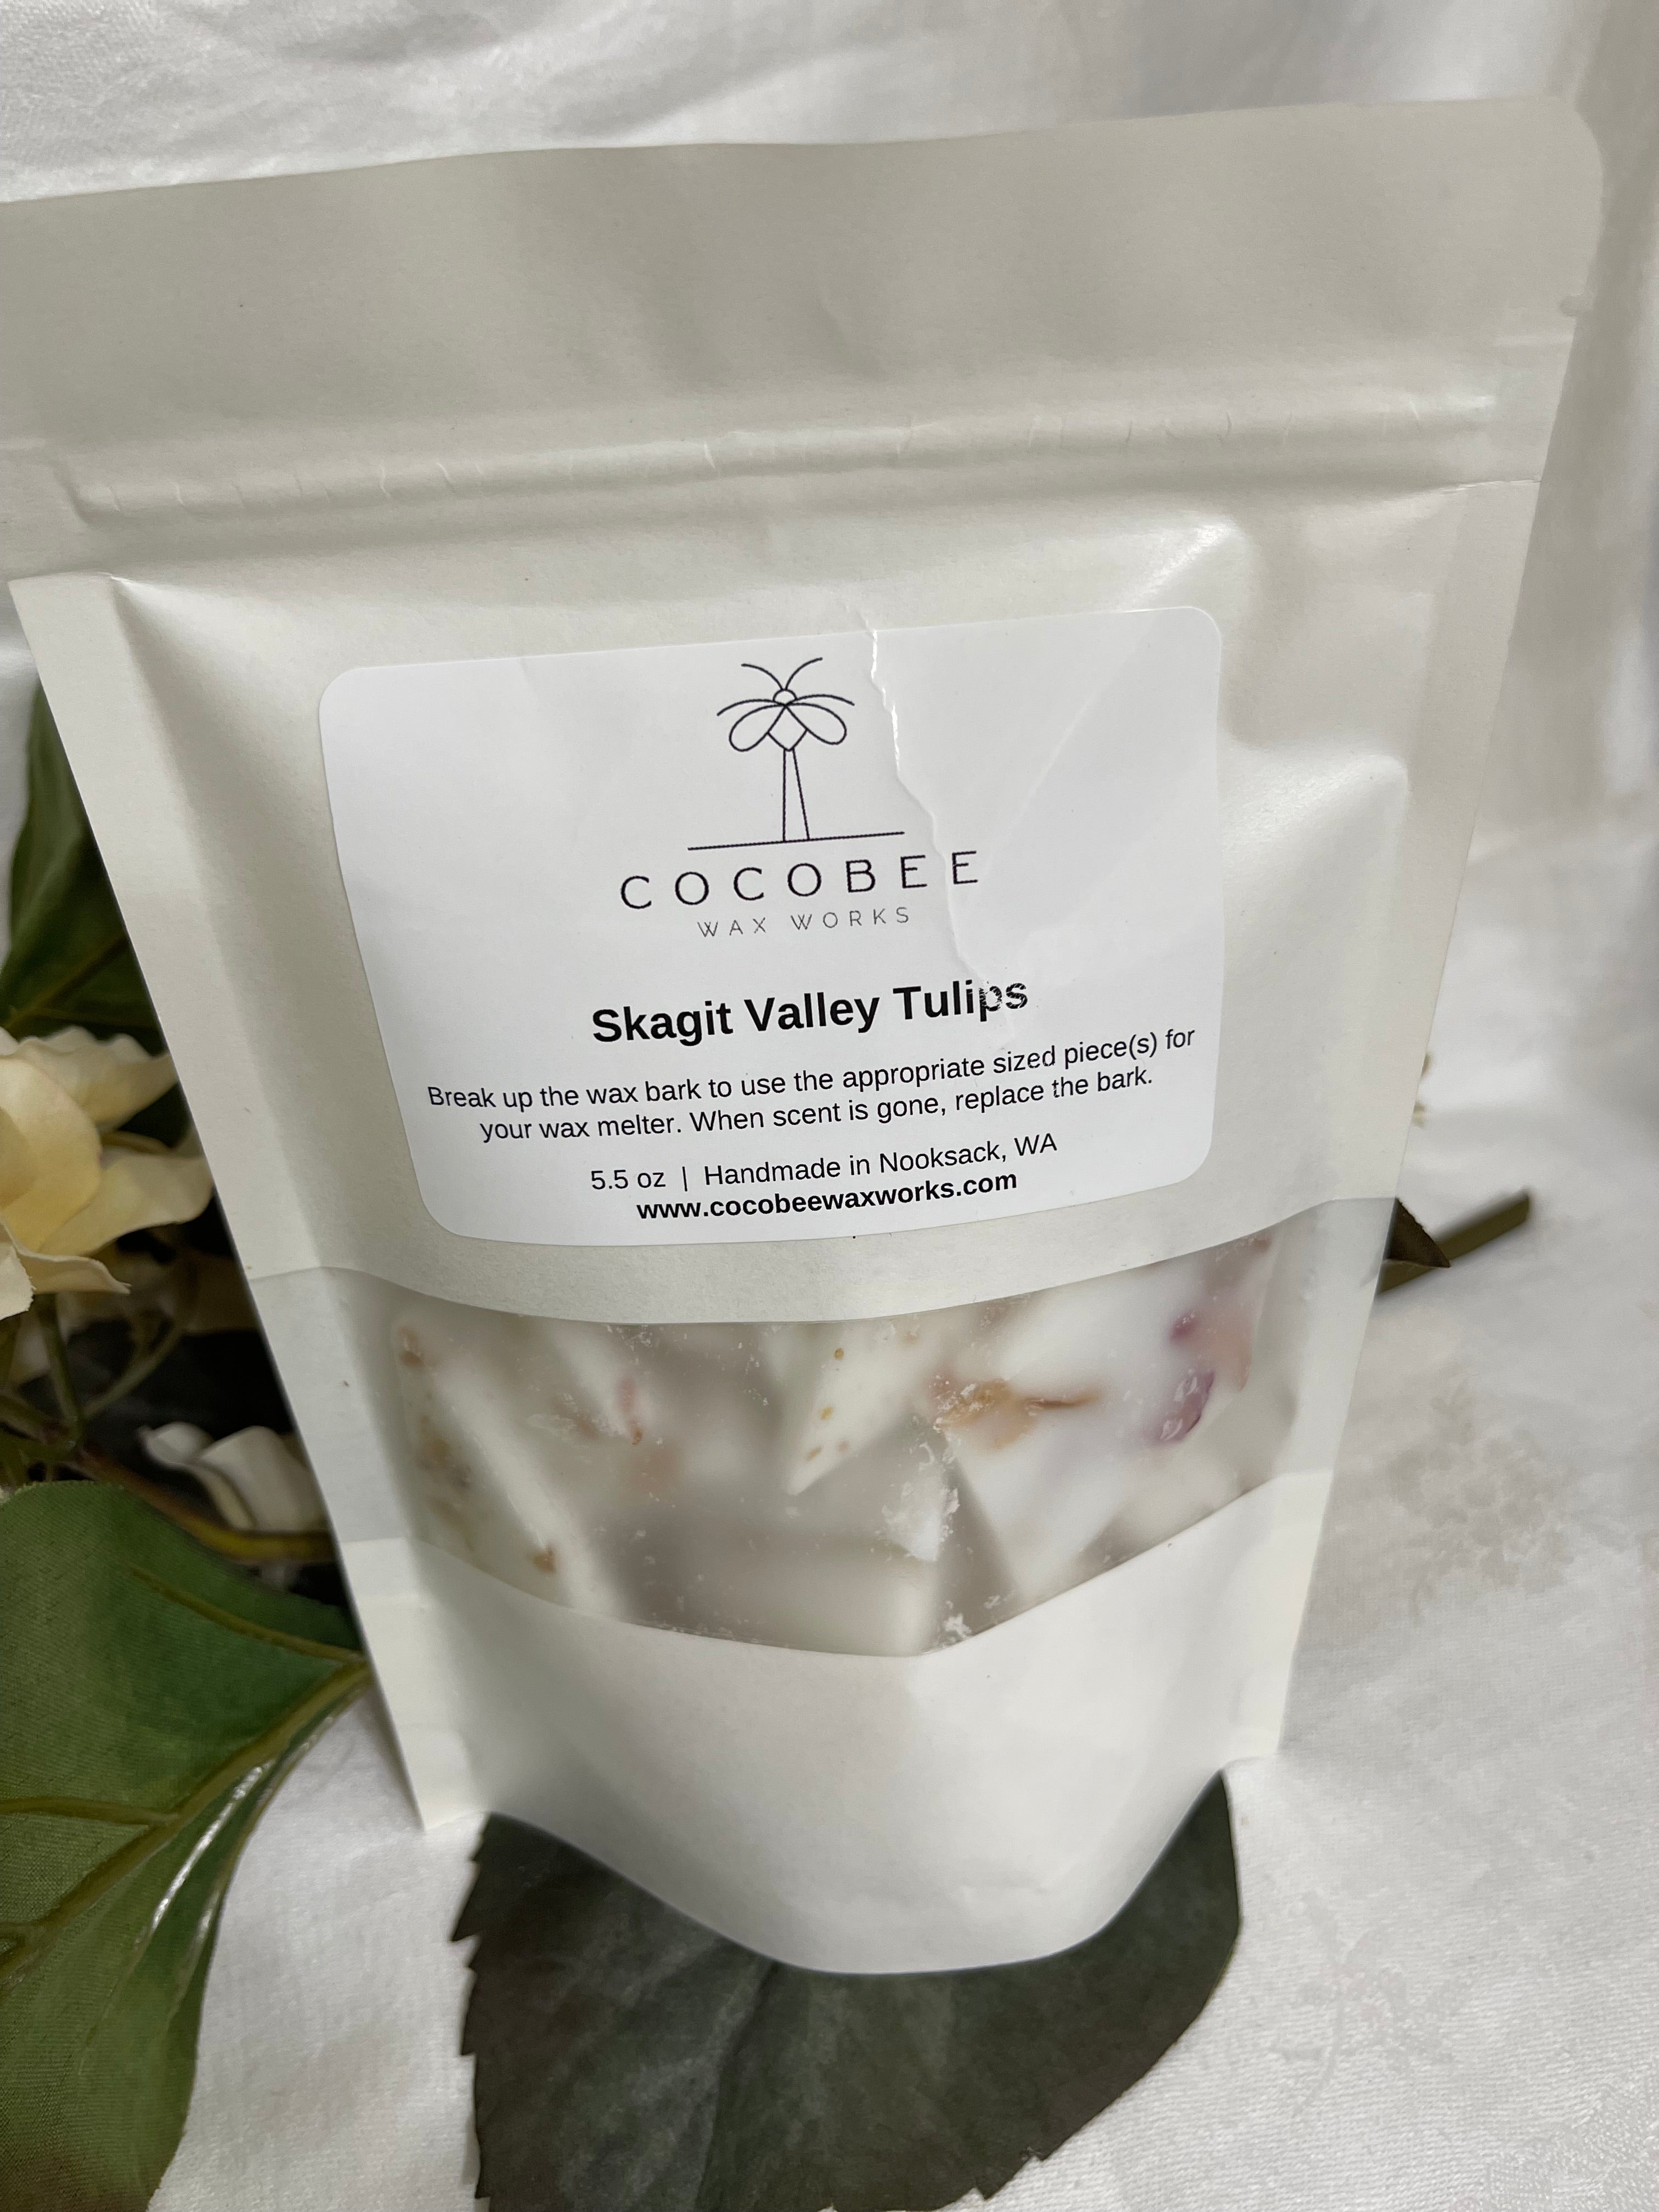 Skagit Valley Tulips Botanical Natural Coconut Wax Bark Wax Melts